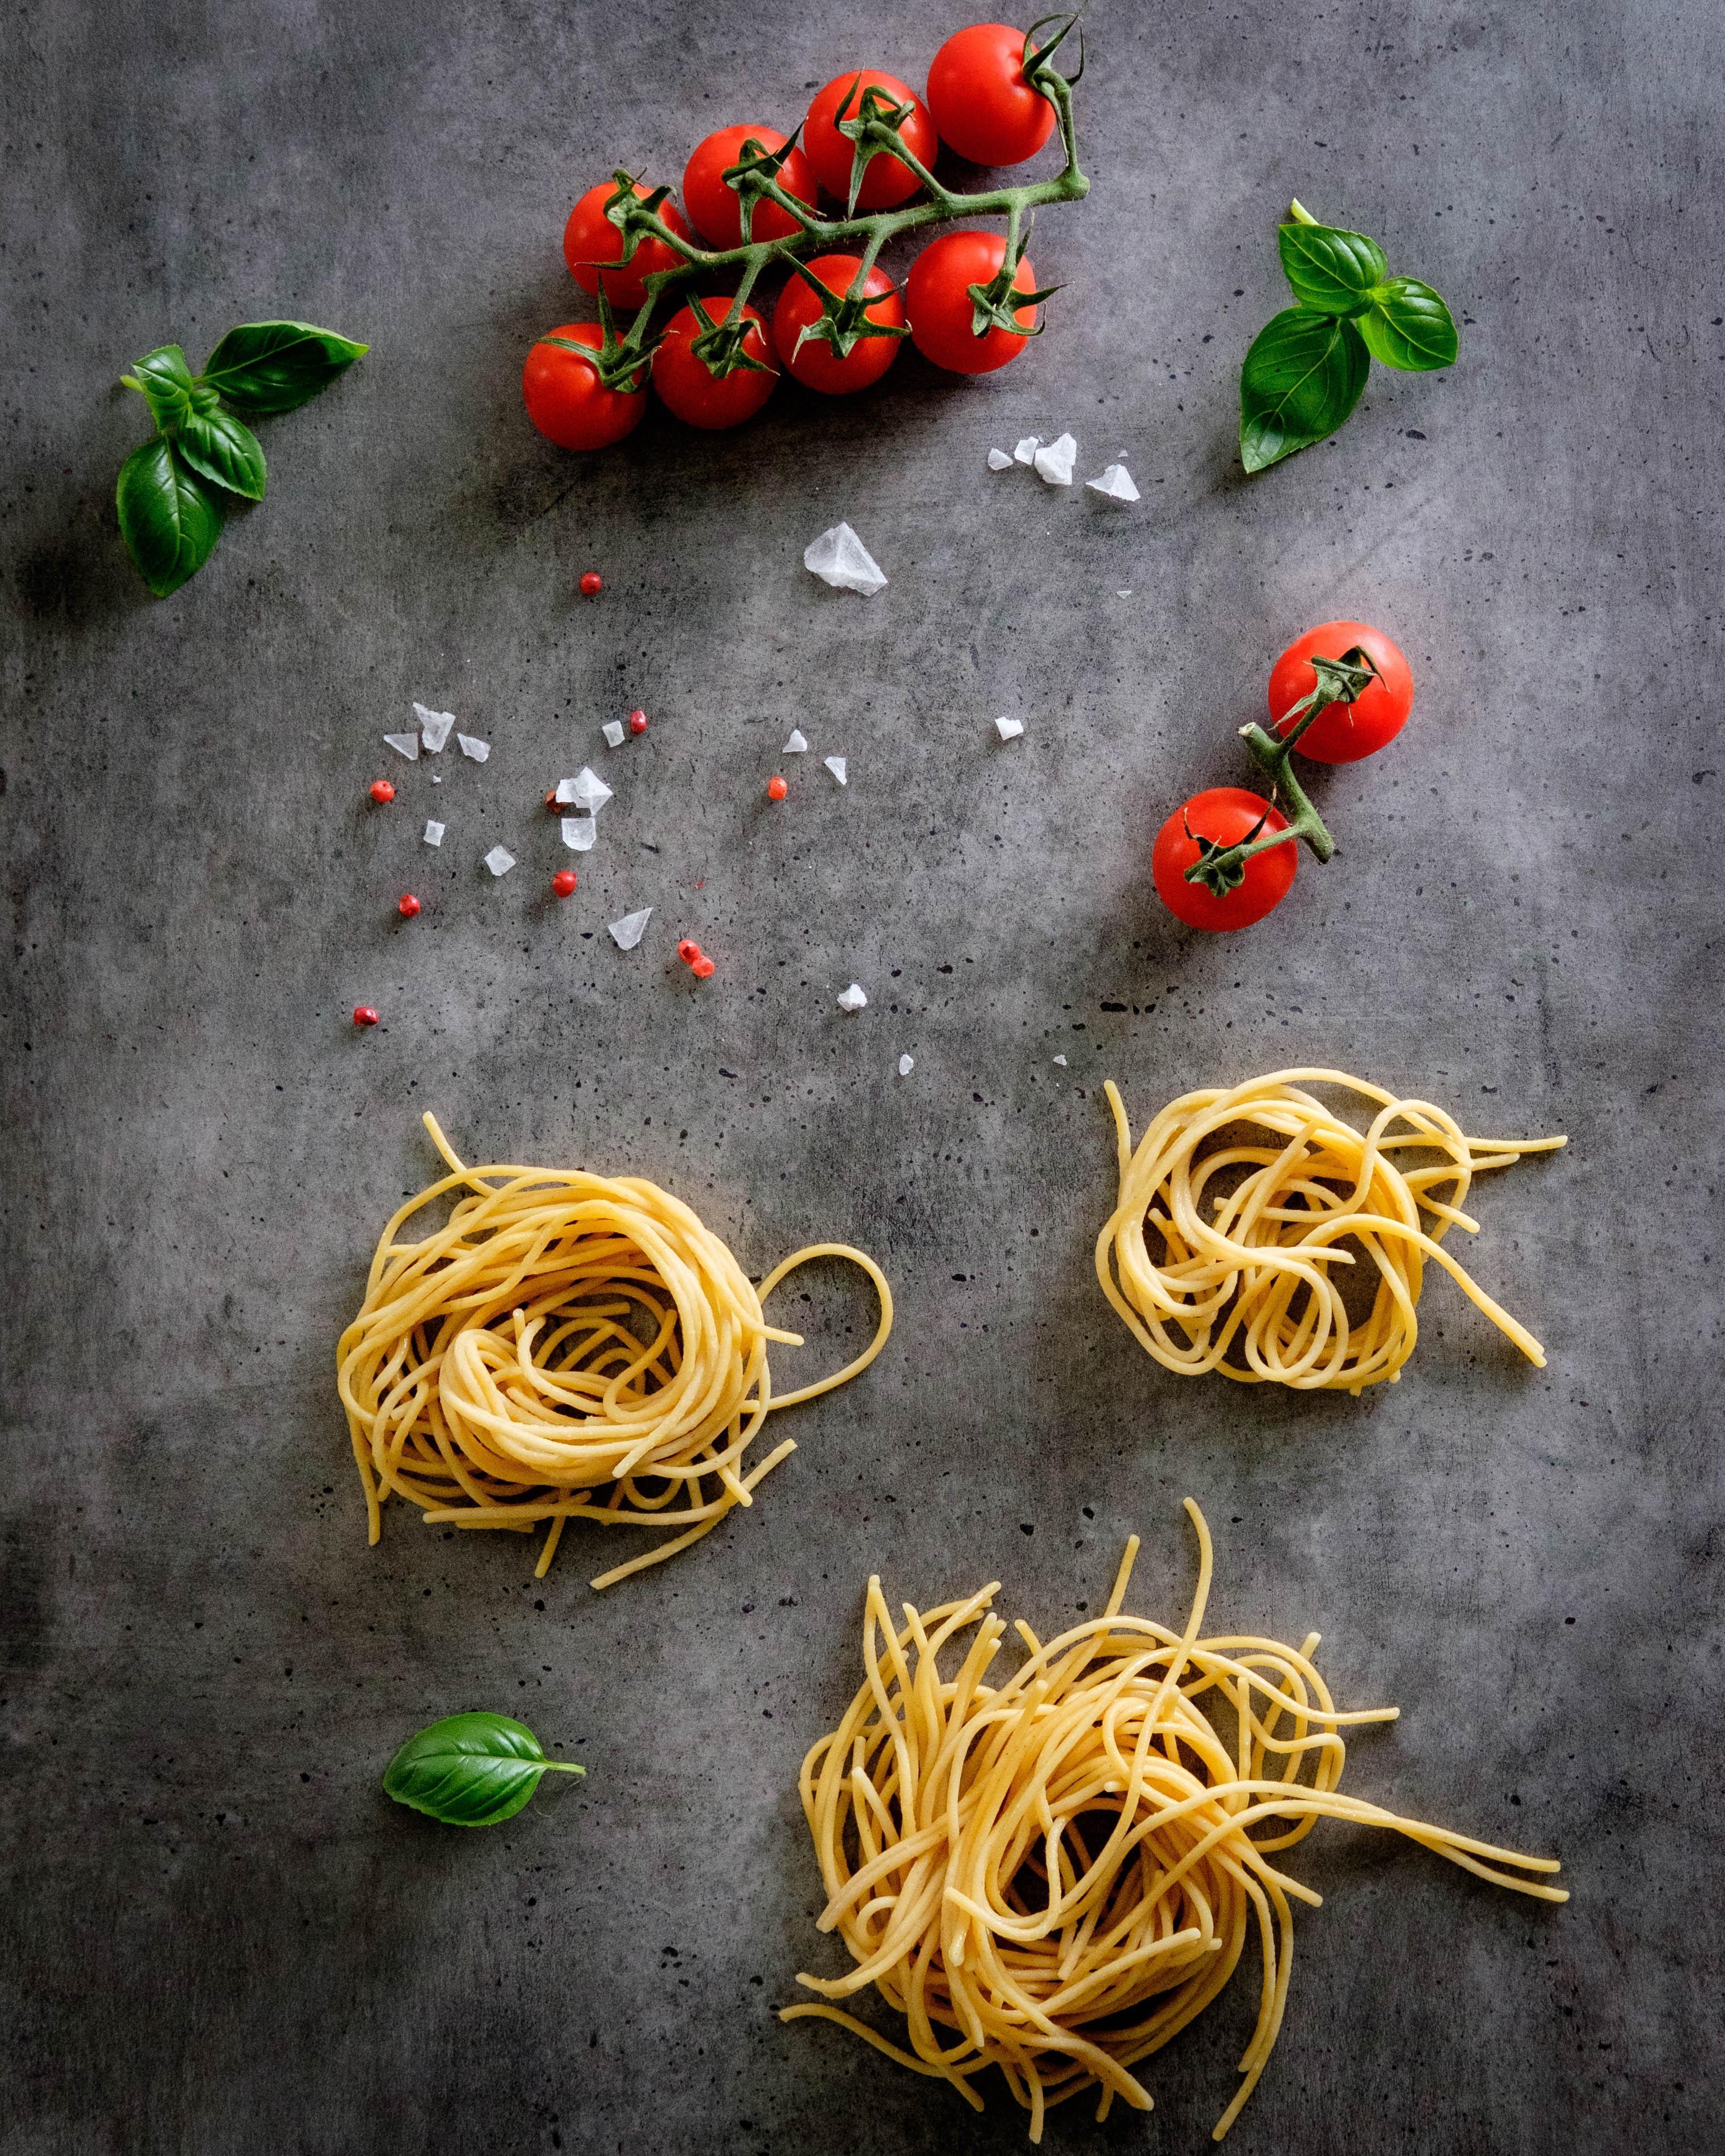 Pastaliebe 🍝
#vegan #pasta #ihana #foodblog